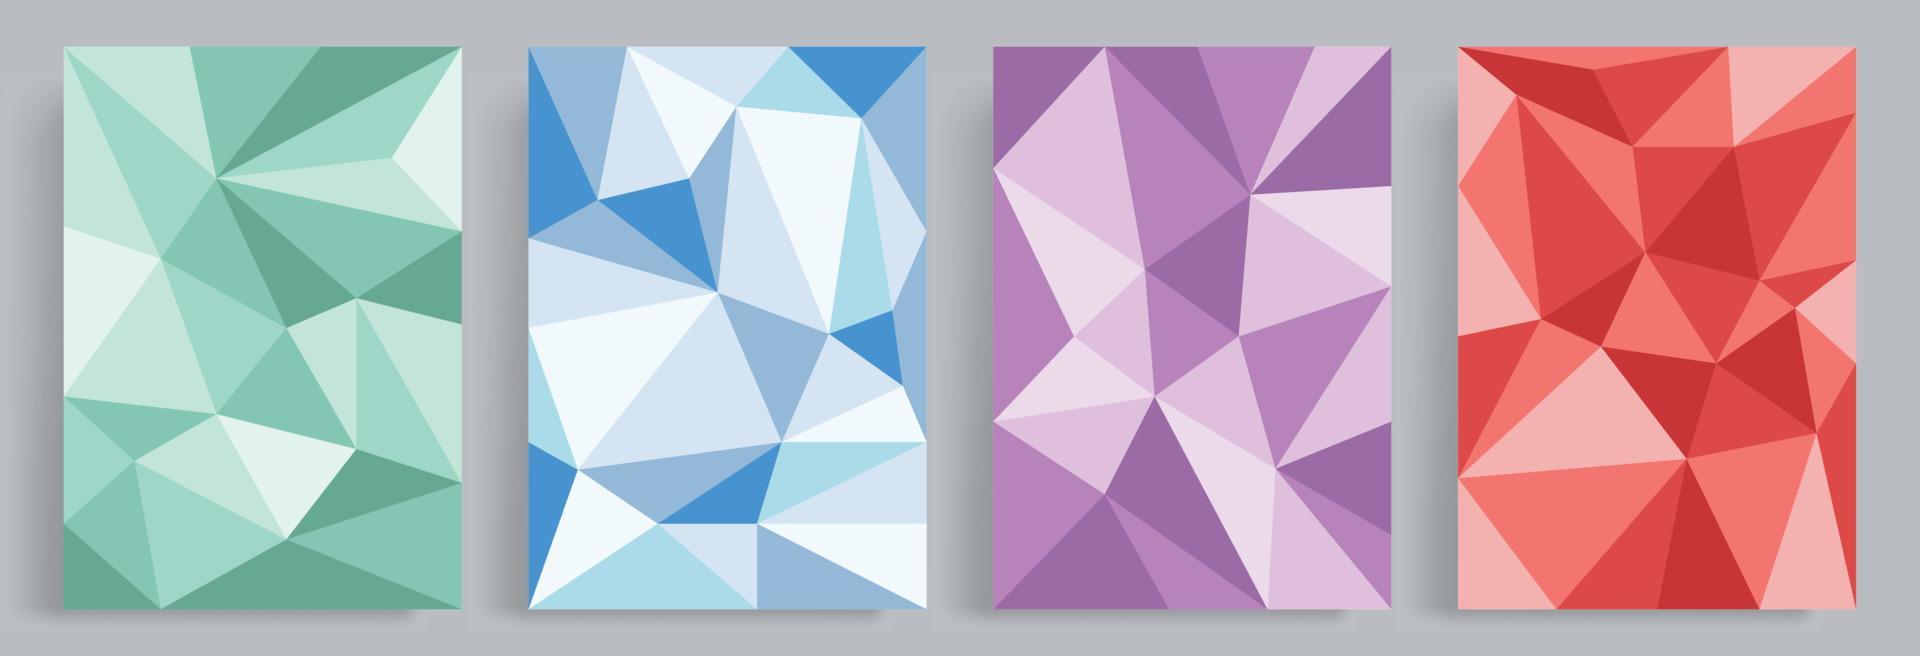 4 conjuntos de fundos de vetor de modelo geométrico minimalista. fundo de textura abstrata polígono colorido. adequado para cartazes, capas, mídias sociais, escritórios